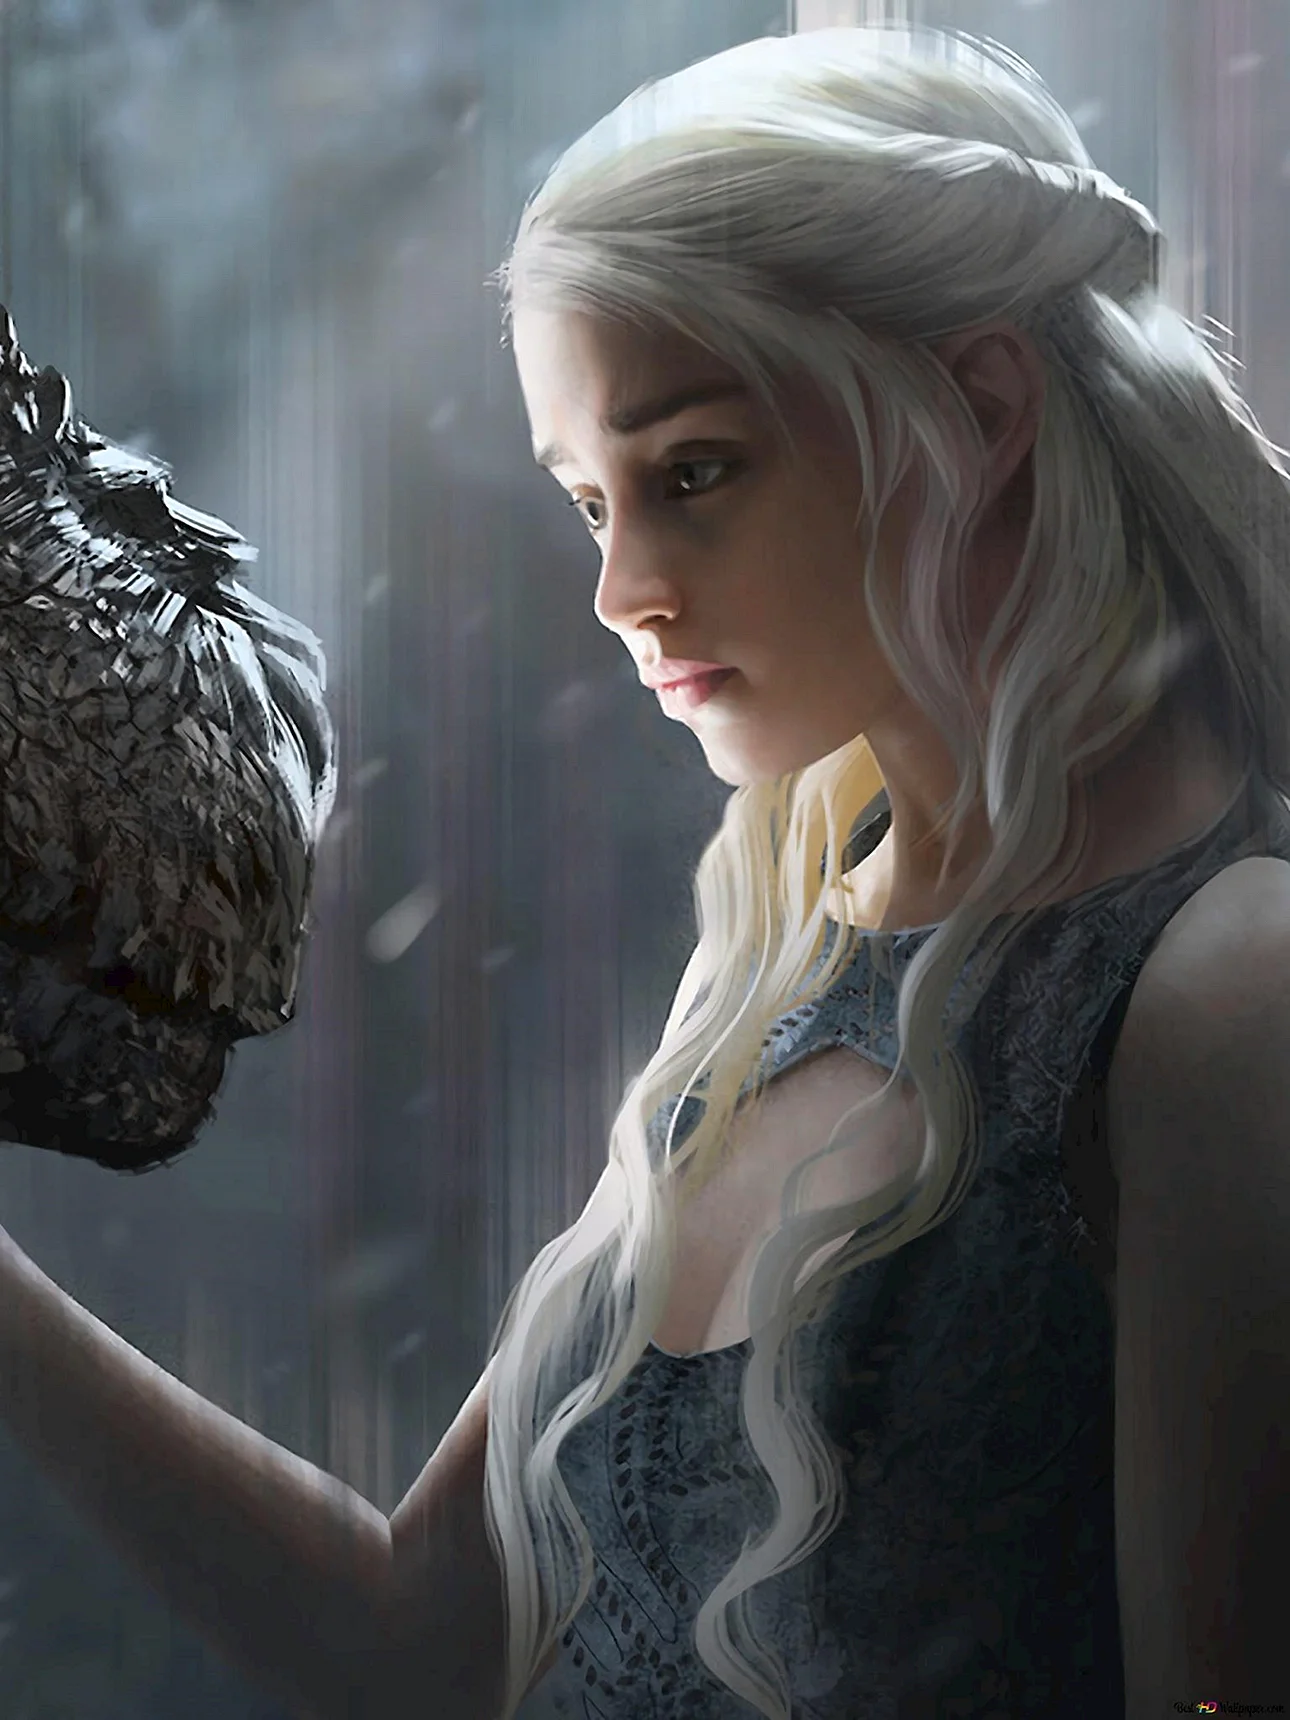 Daenerys Targaryen Wallpaper For iPhone